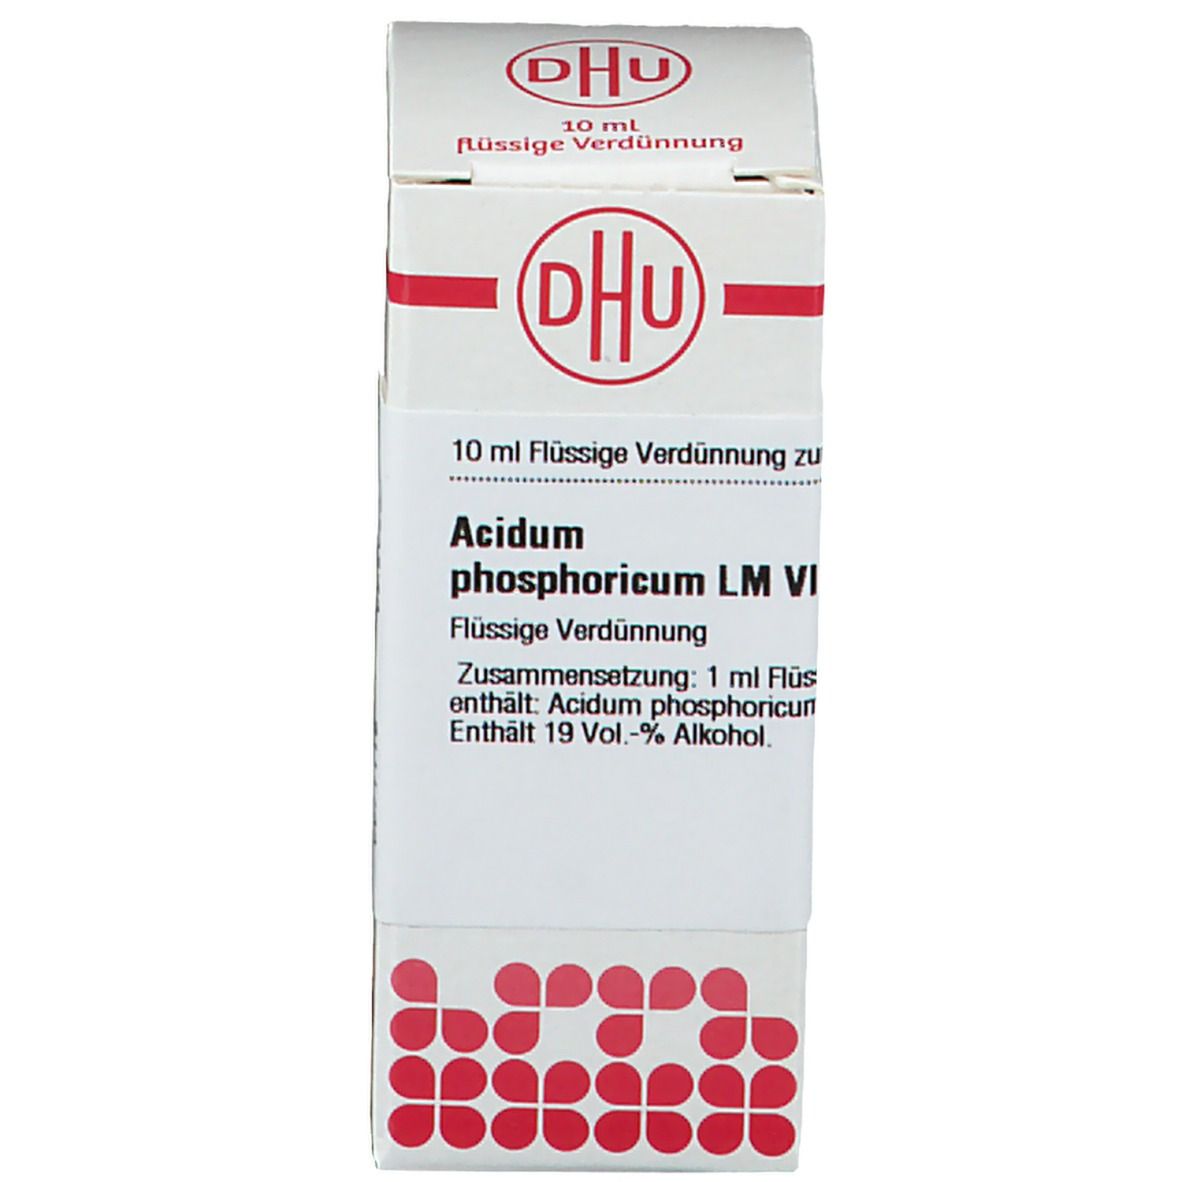 DHU Acidum Phosphoricum LM VI